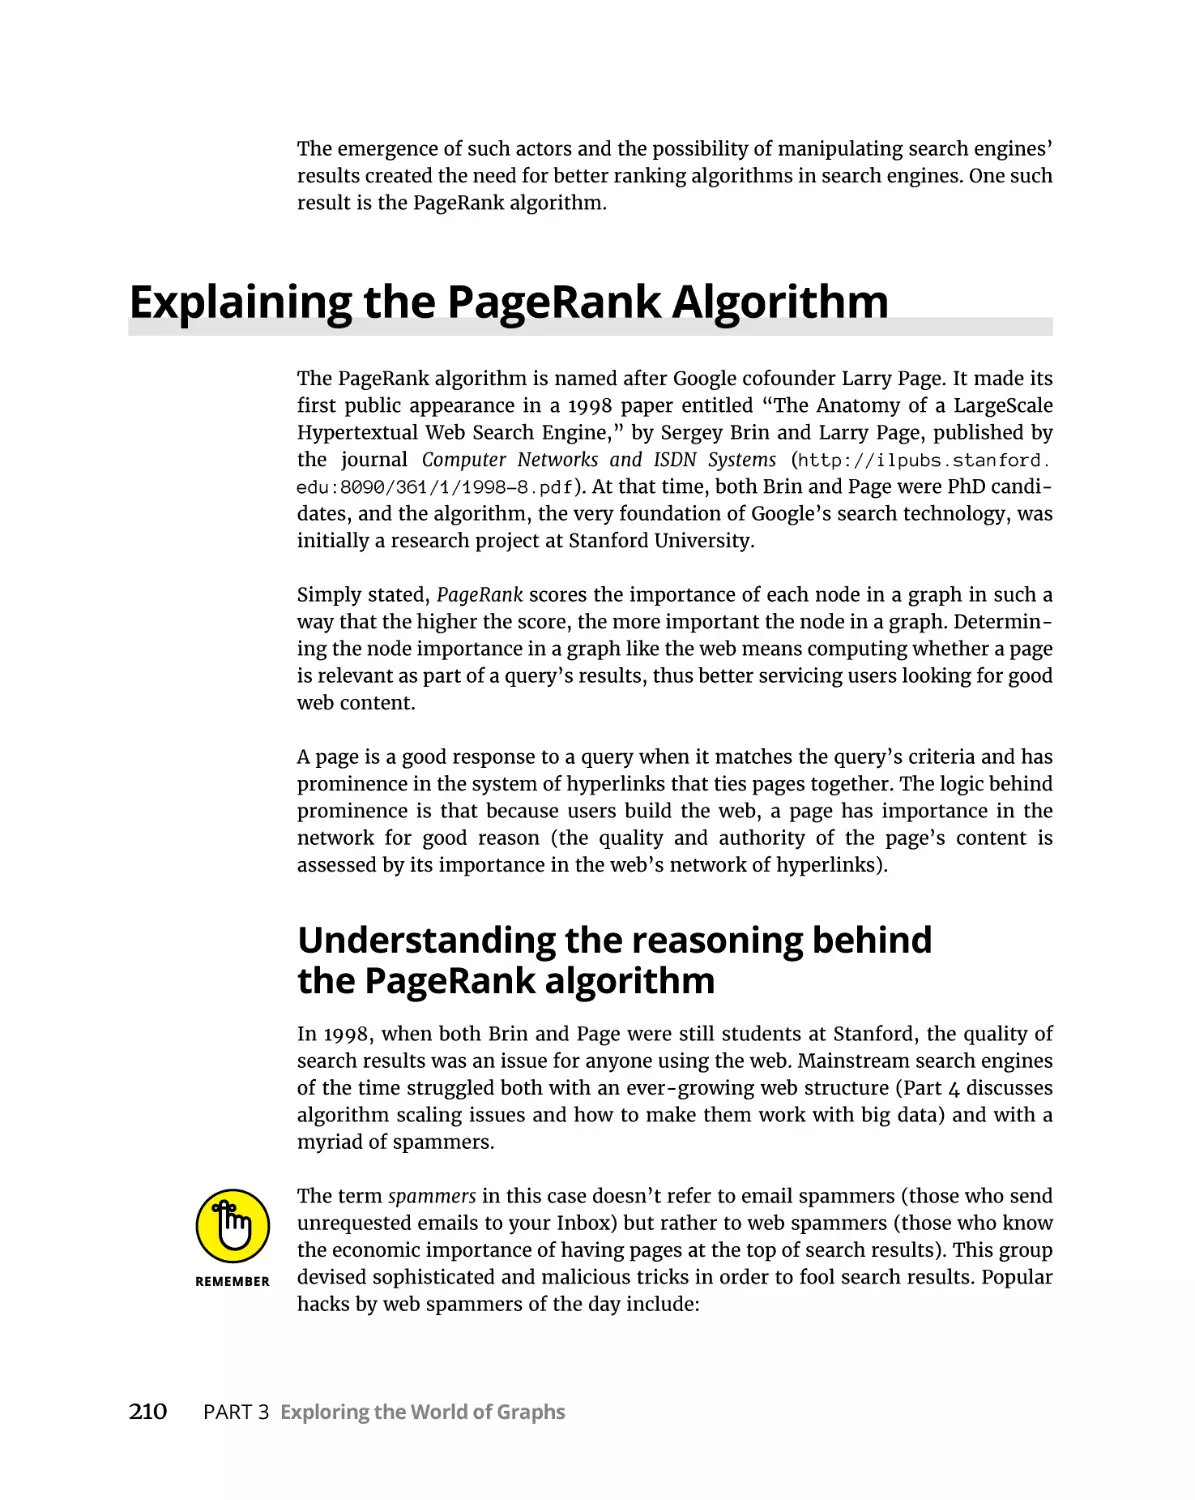 Explaining the PageRank Algorithm
Understanding the reasoning behind the PageRank algorithm